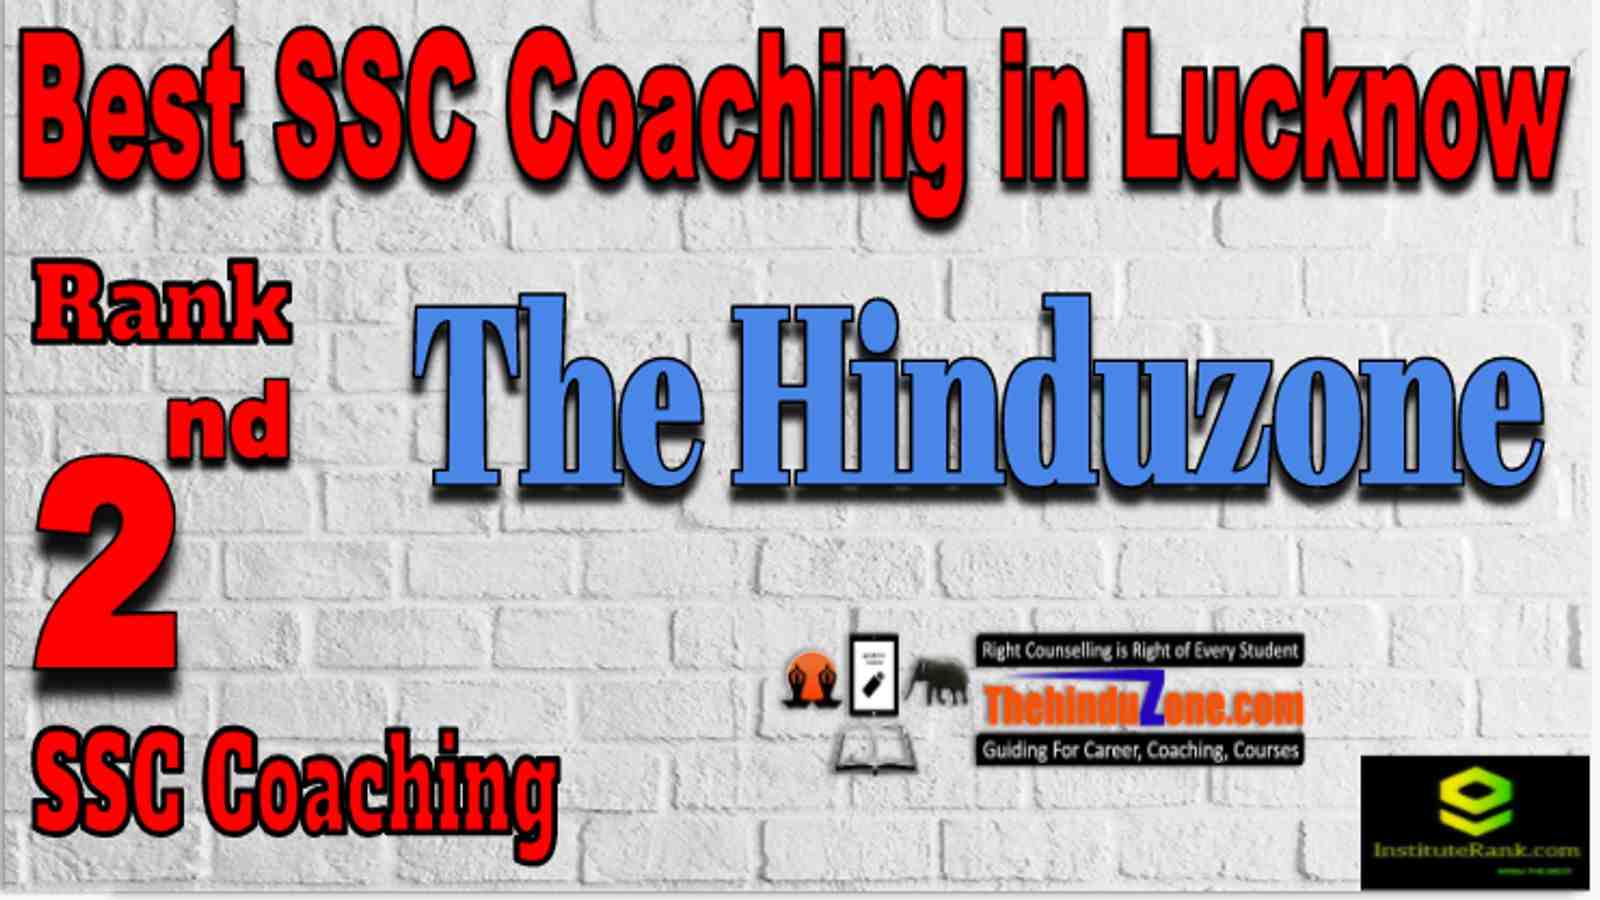 Rank 2 Best SSC Coaching in Lucknow